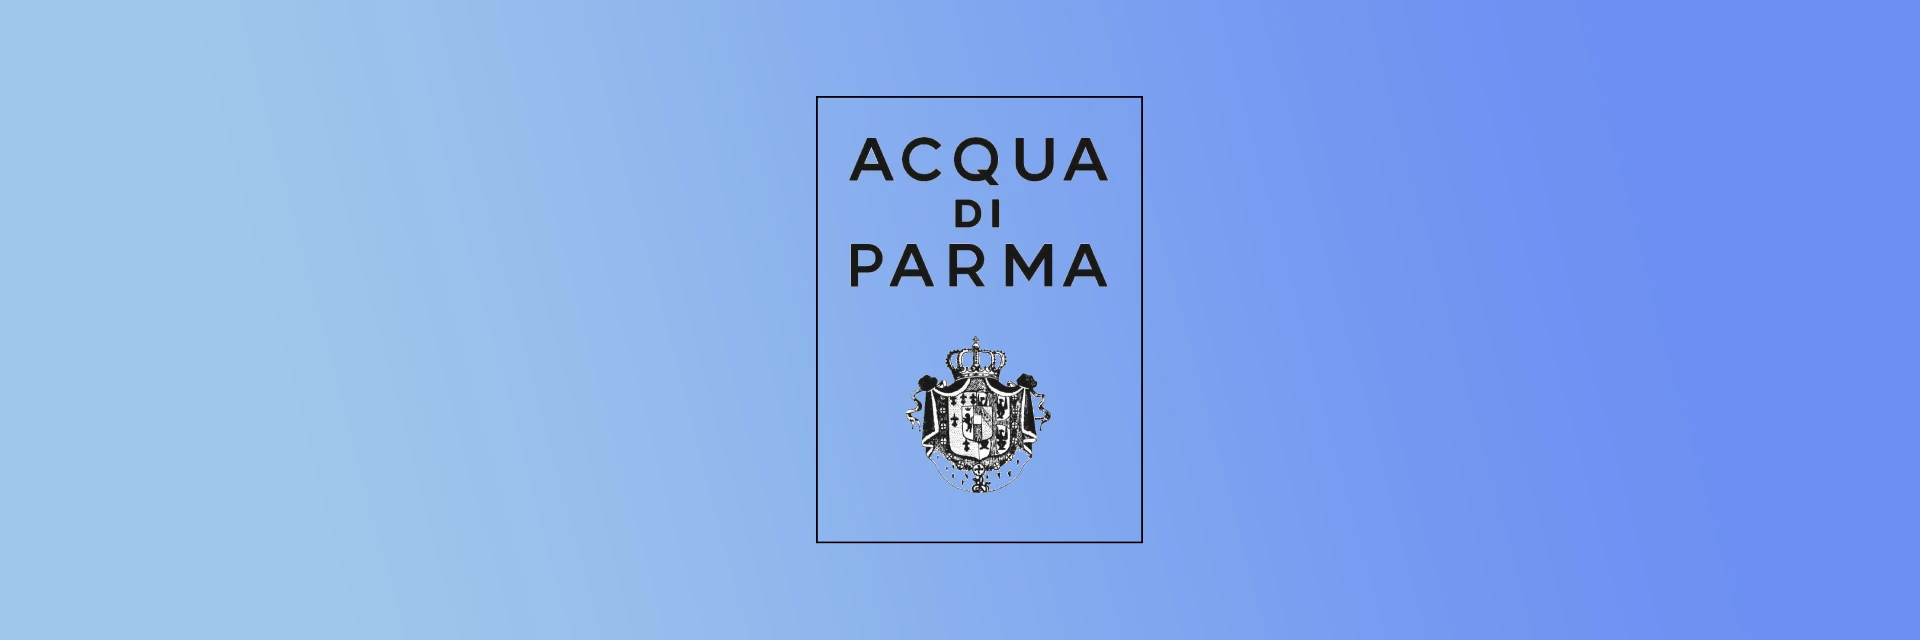 Image of Acqua Di Parma perfume brand logo